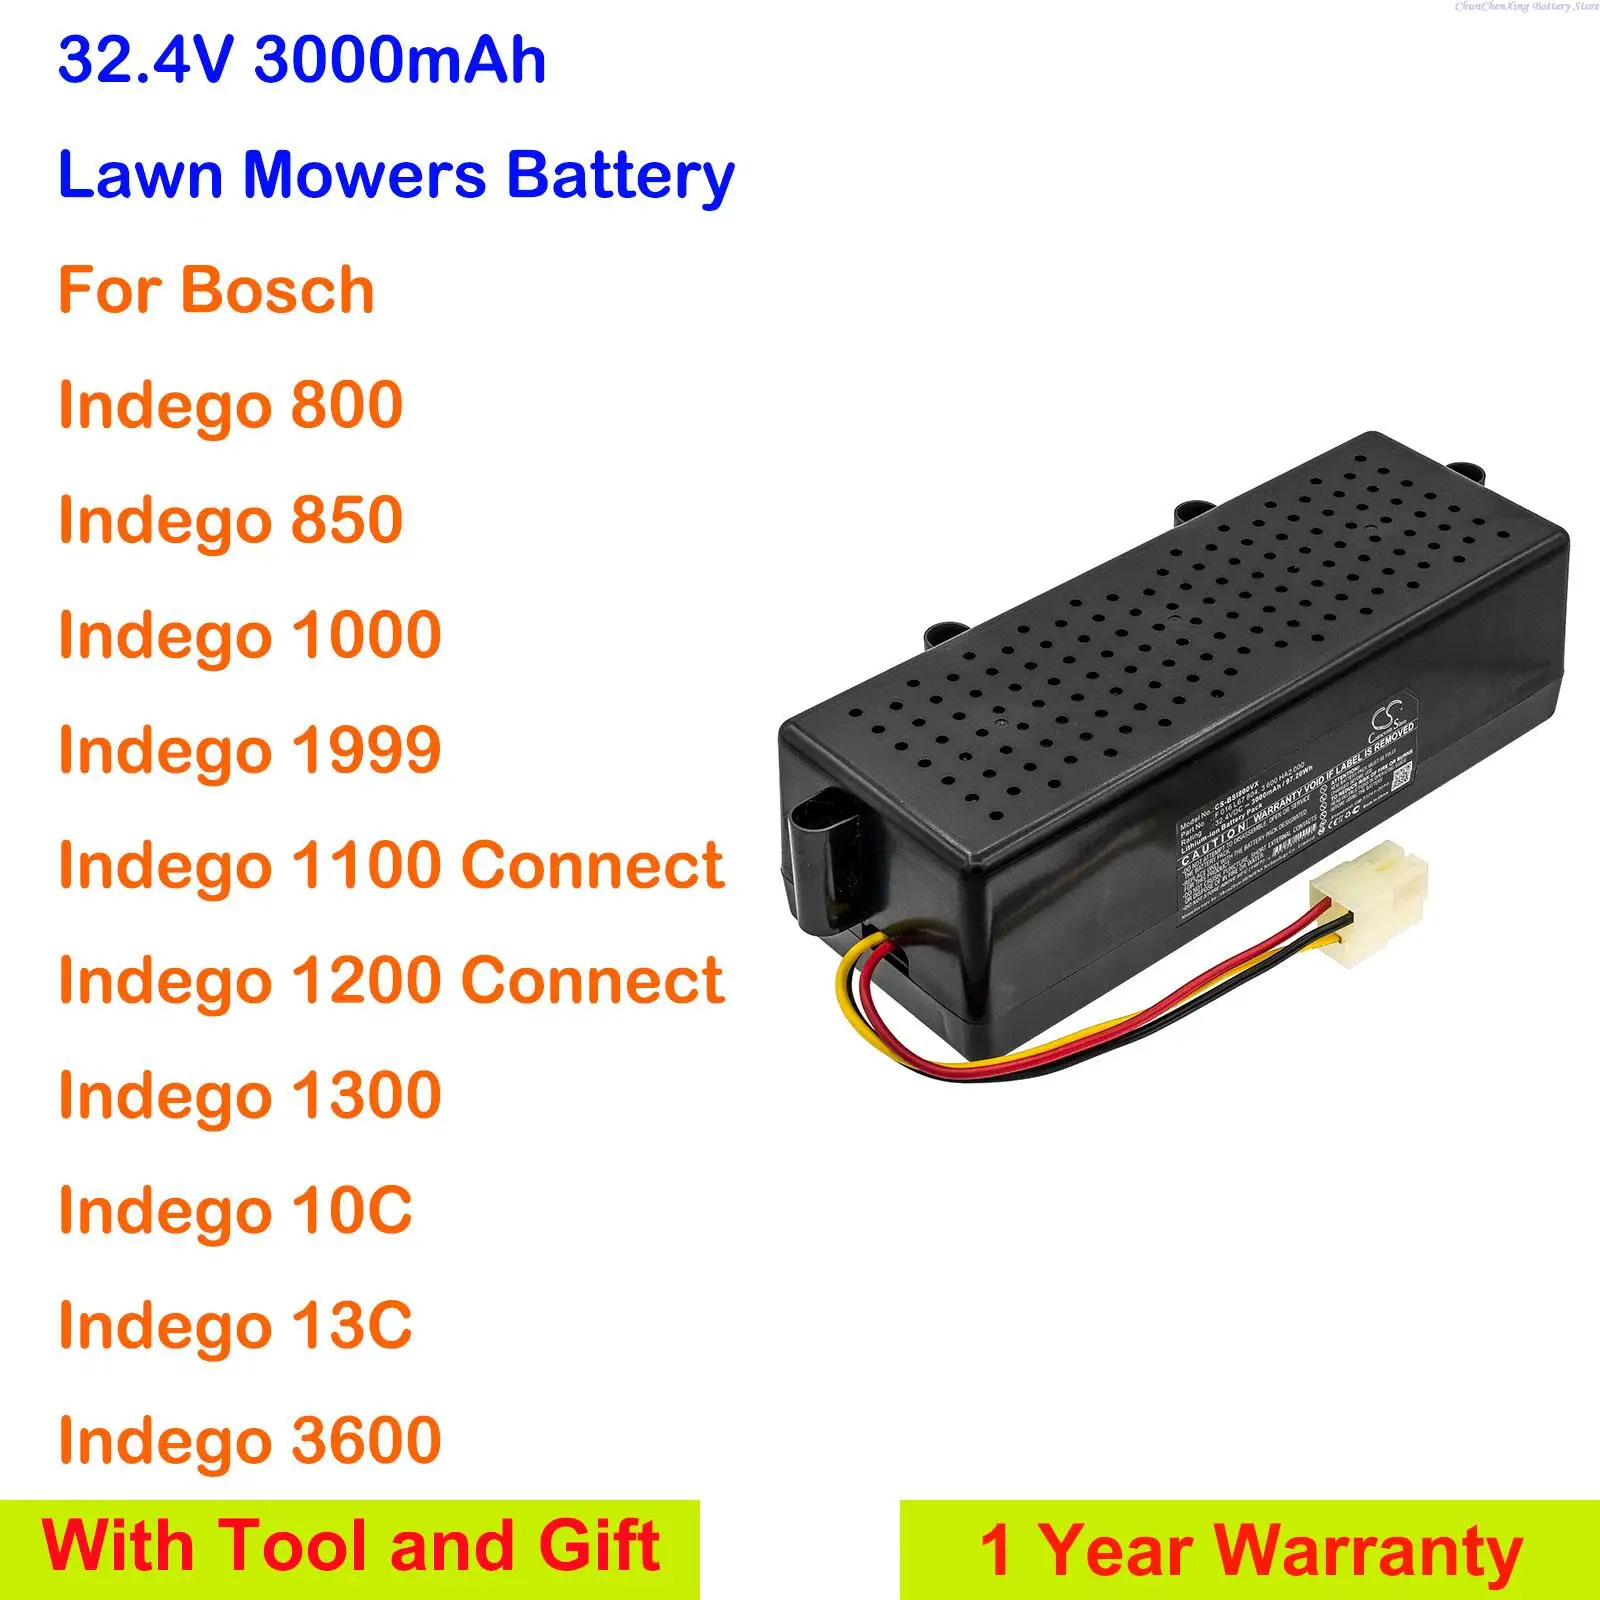 

OrangeYu 3000mAh Lawn Mowers Battery for Bosch Indego 1000, 10C,1100 Connect,1200 Connect,1300,13C, 1999, 3600, 800, 850